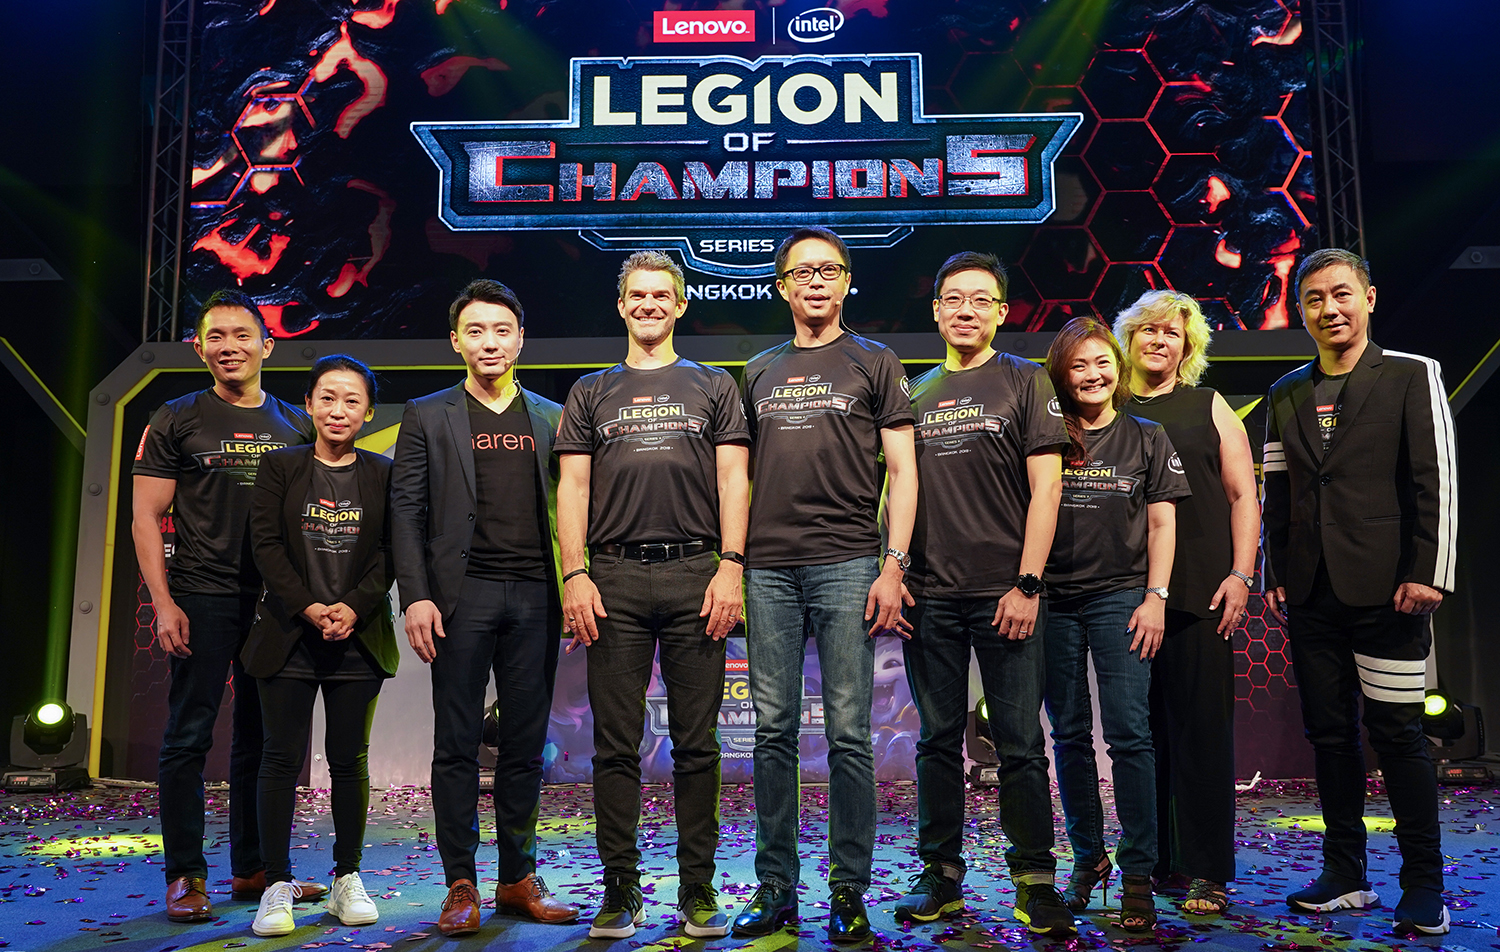 Lenovo kicks off Legion of Champions Series II grand finale